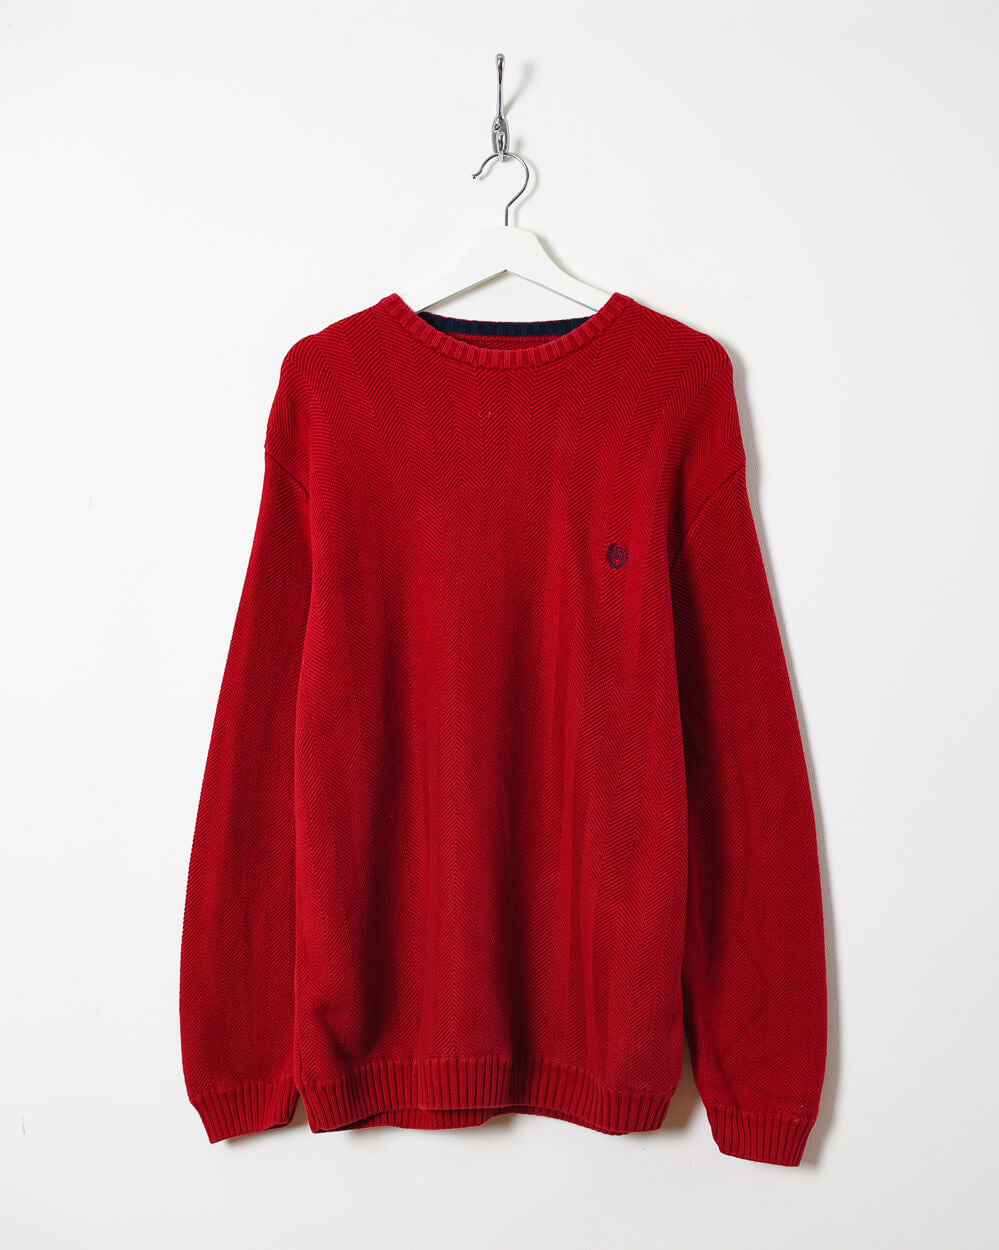 Maroon Ralph Lauren Chaps Knitted Sweatshirt - X-Large